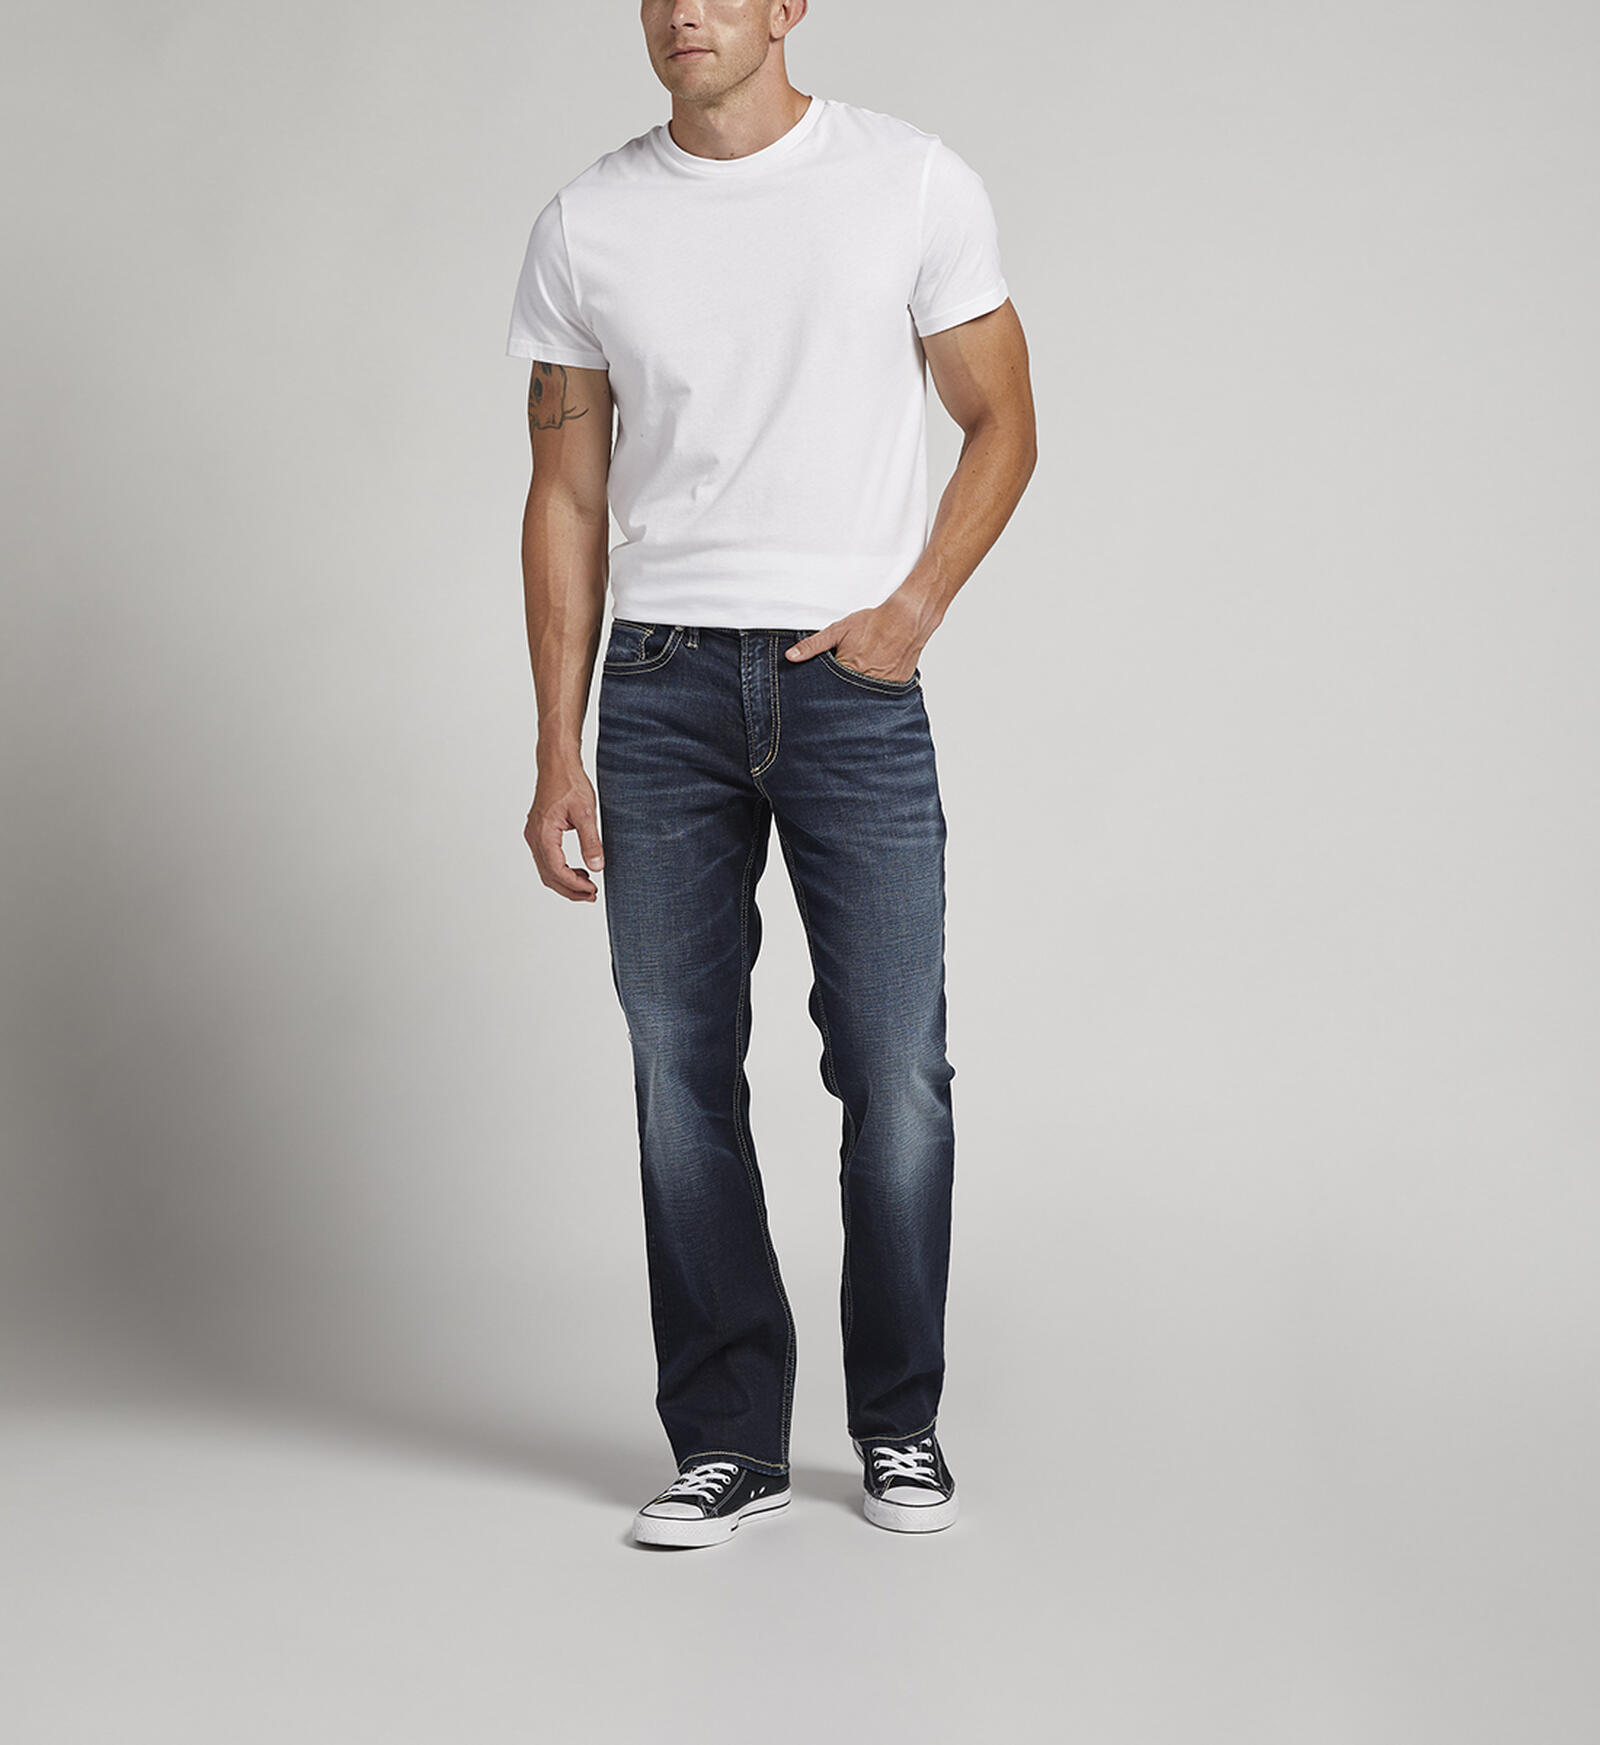 Hollister Hco. Guys Jeans - Slim jeans 